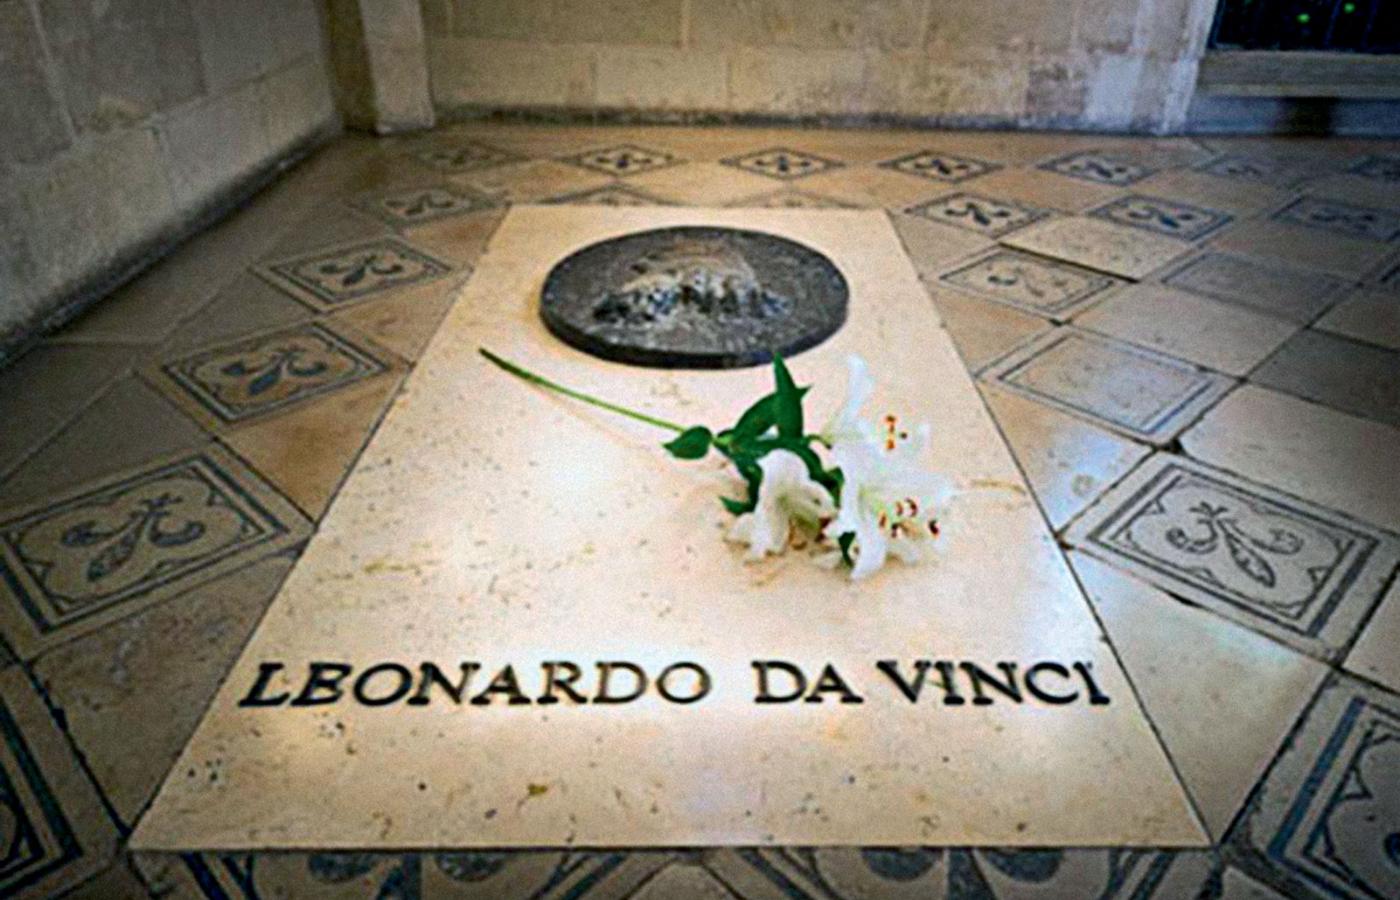 Domniemany grób Leonarda da Vinci.